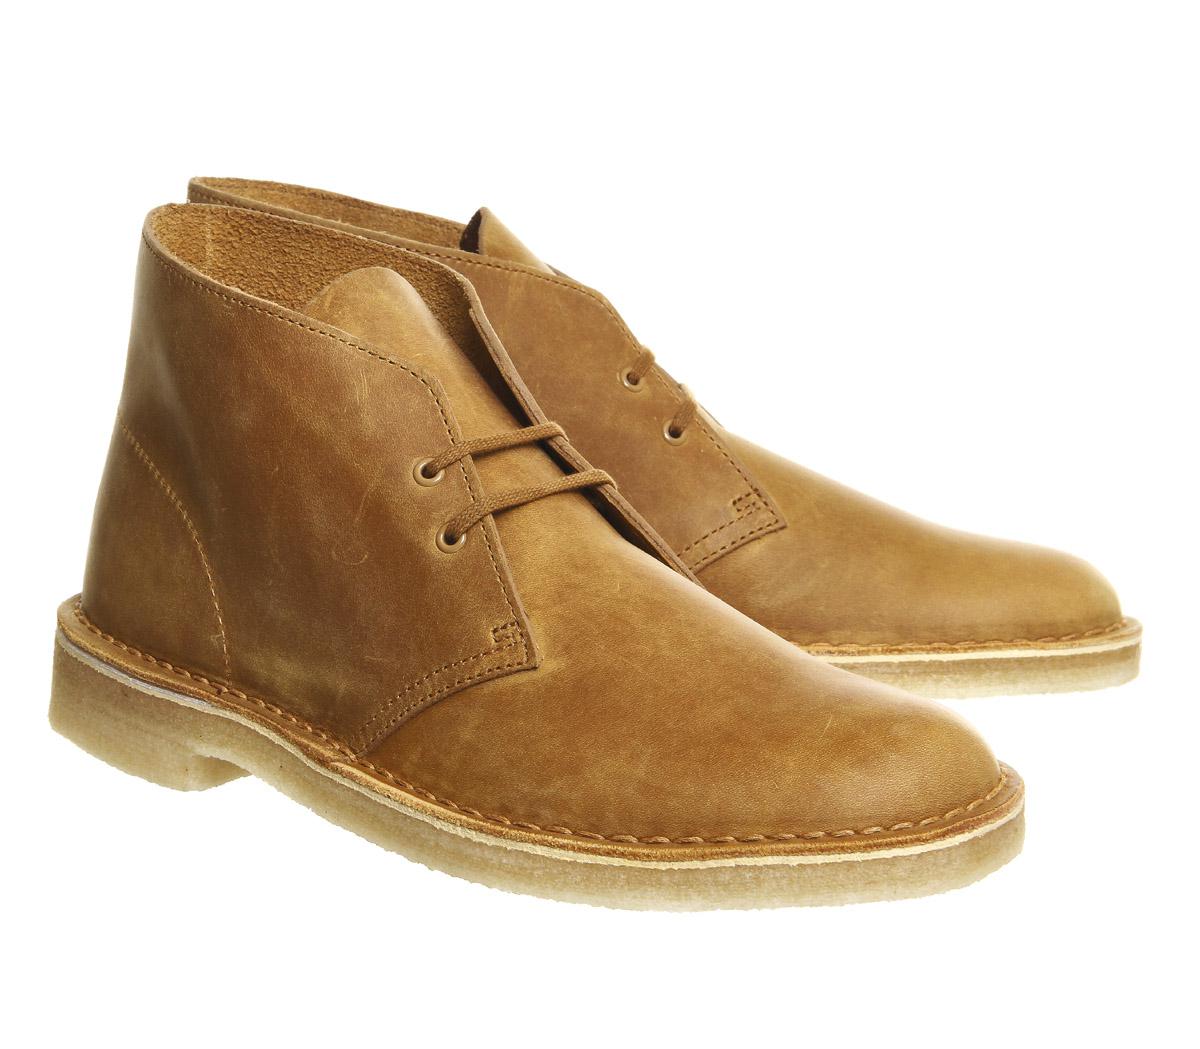 Lyst - Clarks Desert Boots in Brown for Men